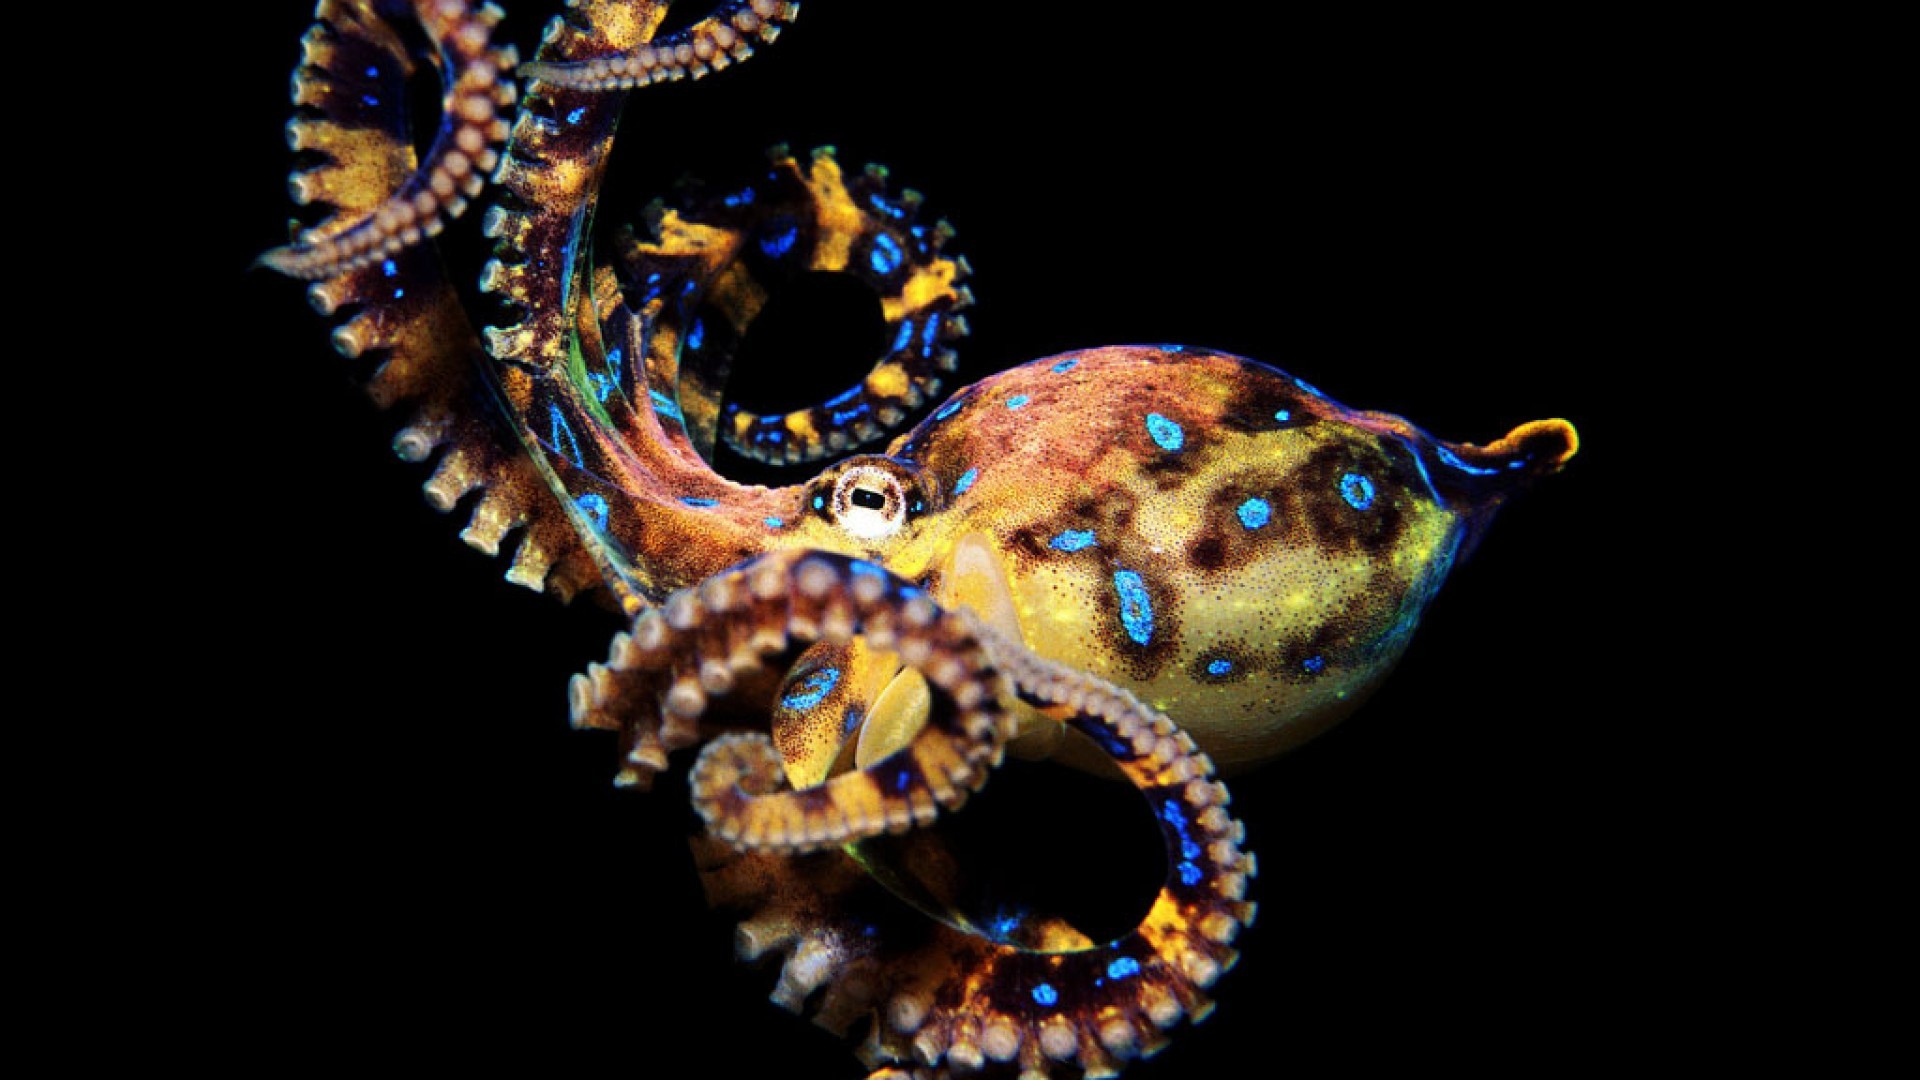 HD Octopus Wallpaper Image